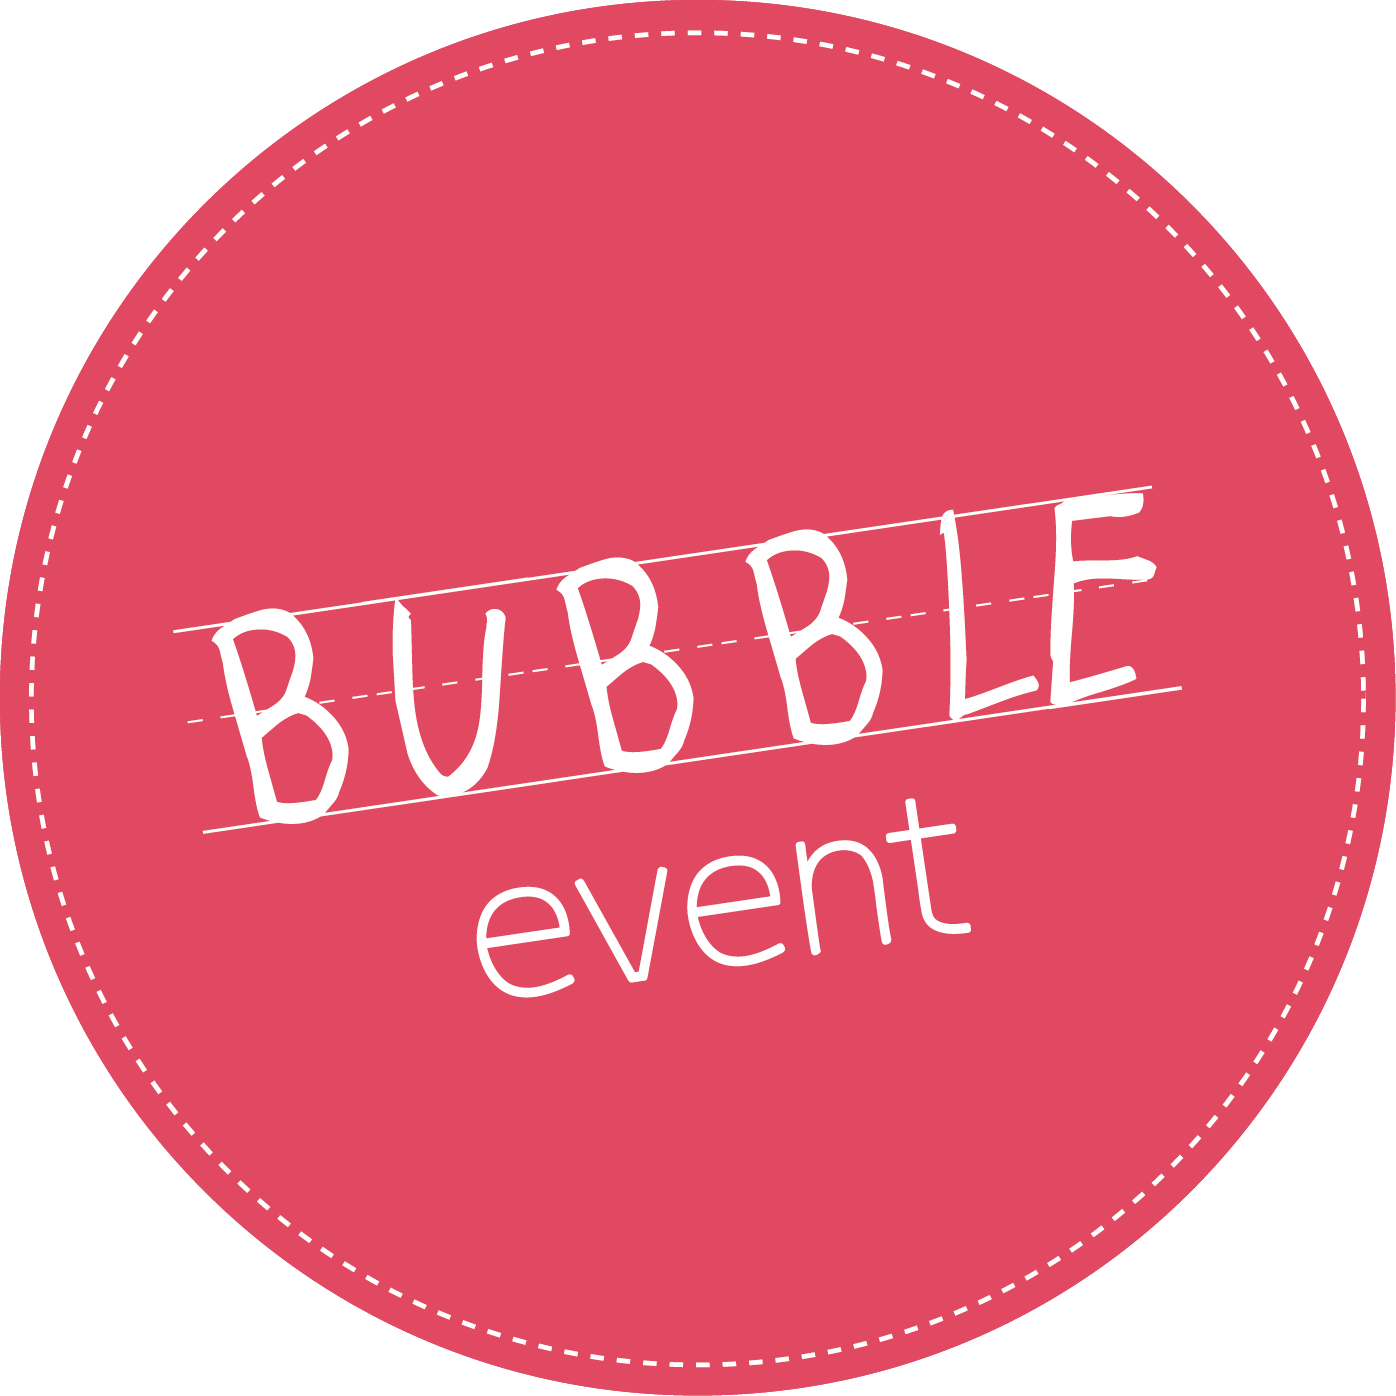 Bubble Event